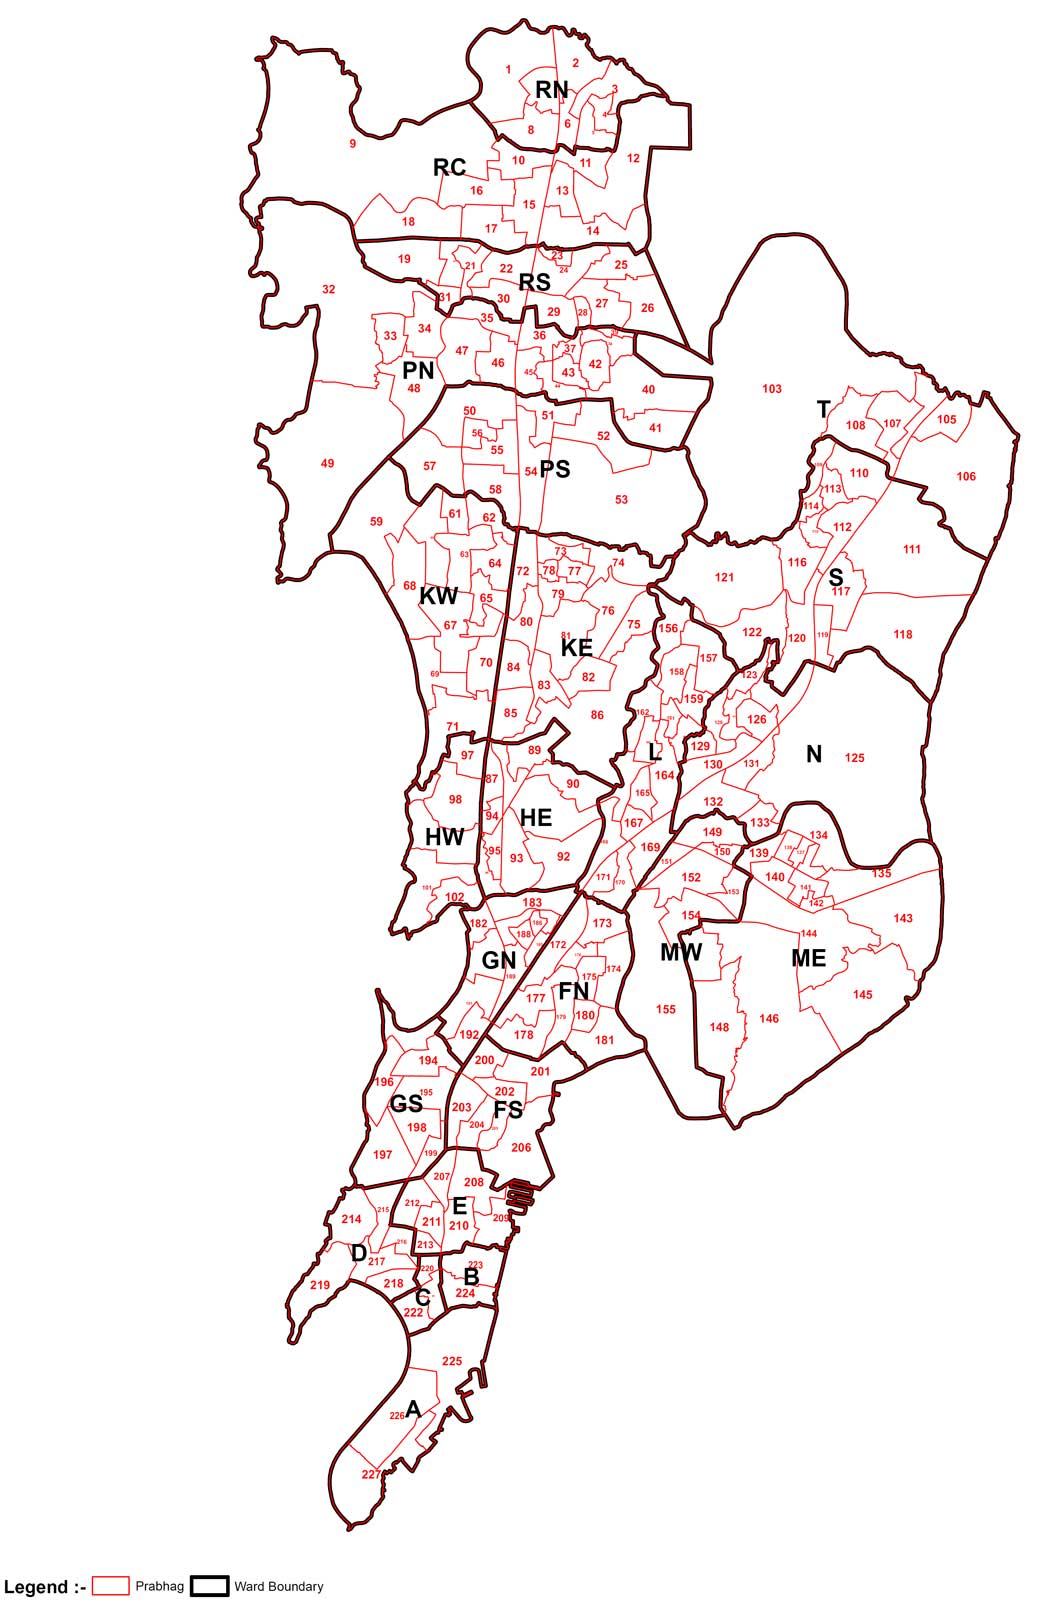 BMC Ward Map 2017 showing all wards